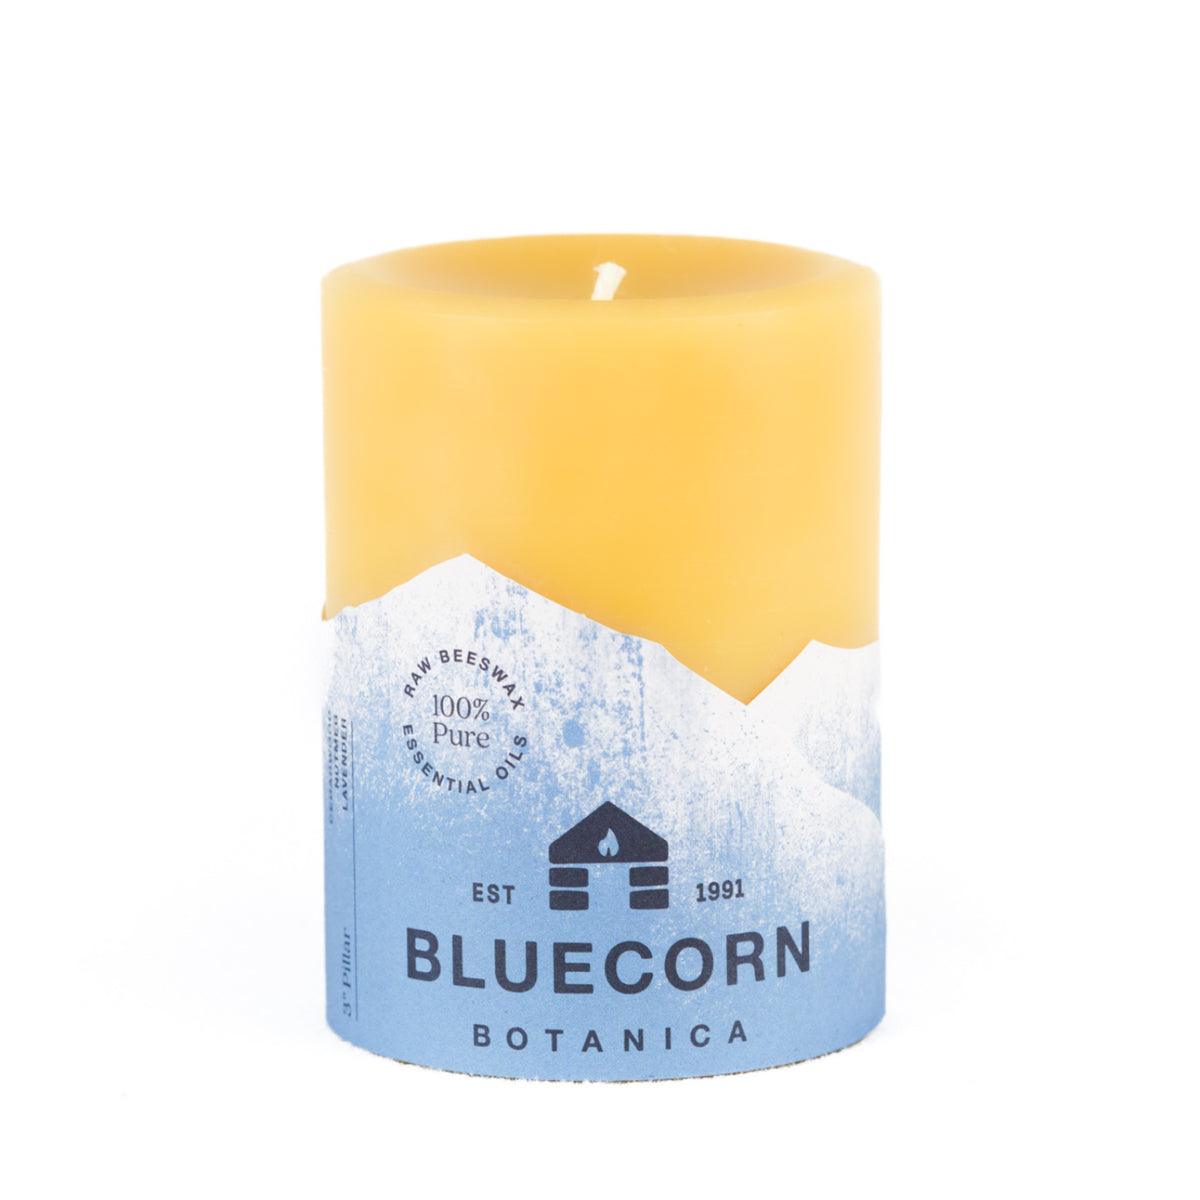 Bluecorn Beeswax 100% Pure Beeswax Aromatherapy Pillar Candle (2x3